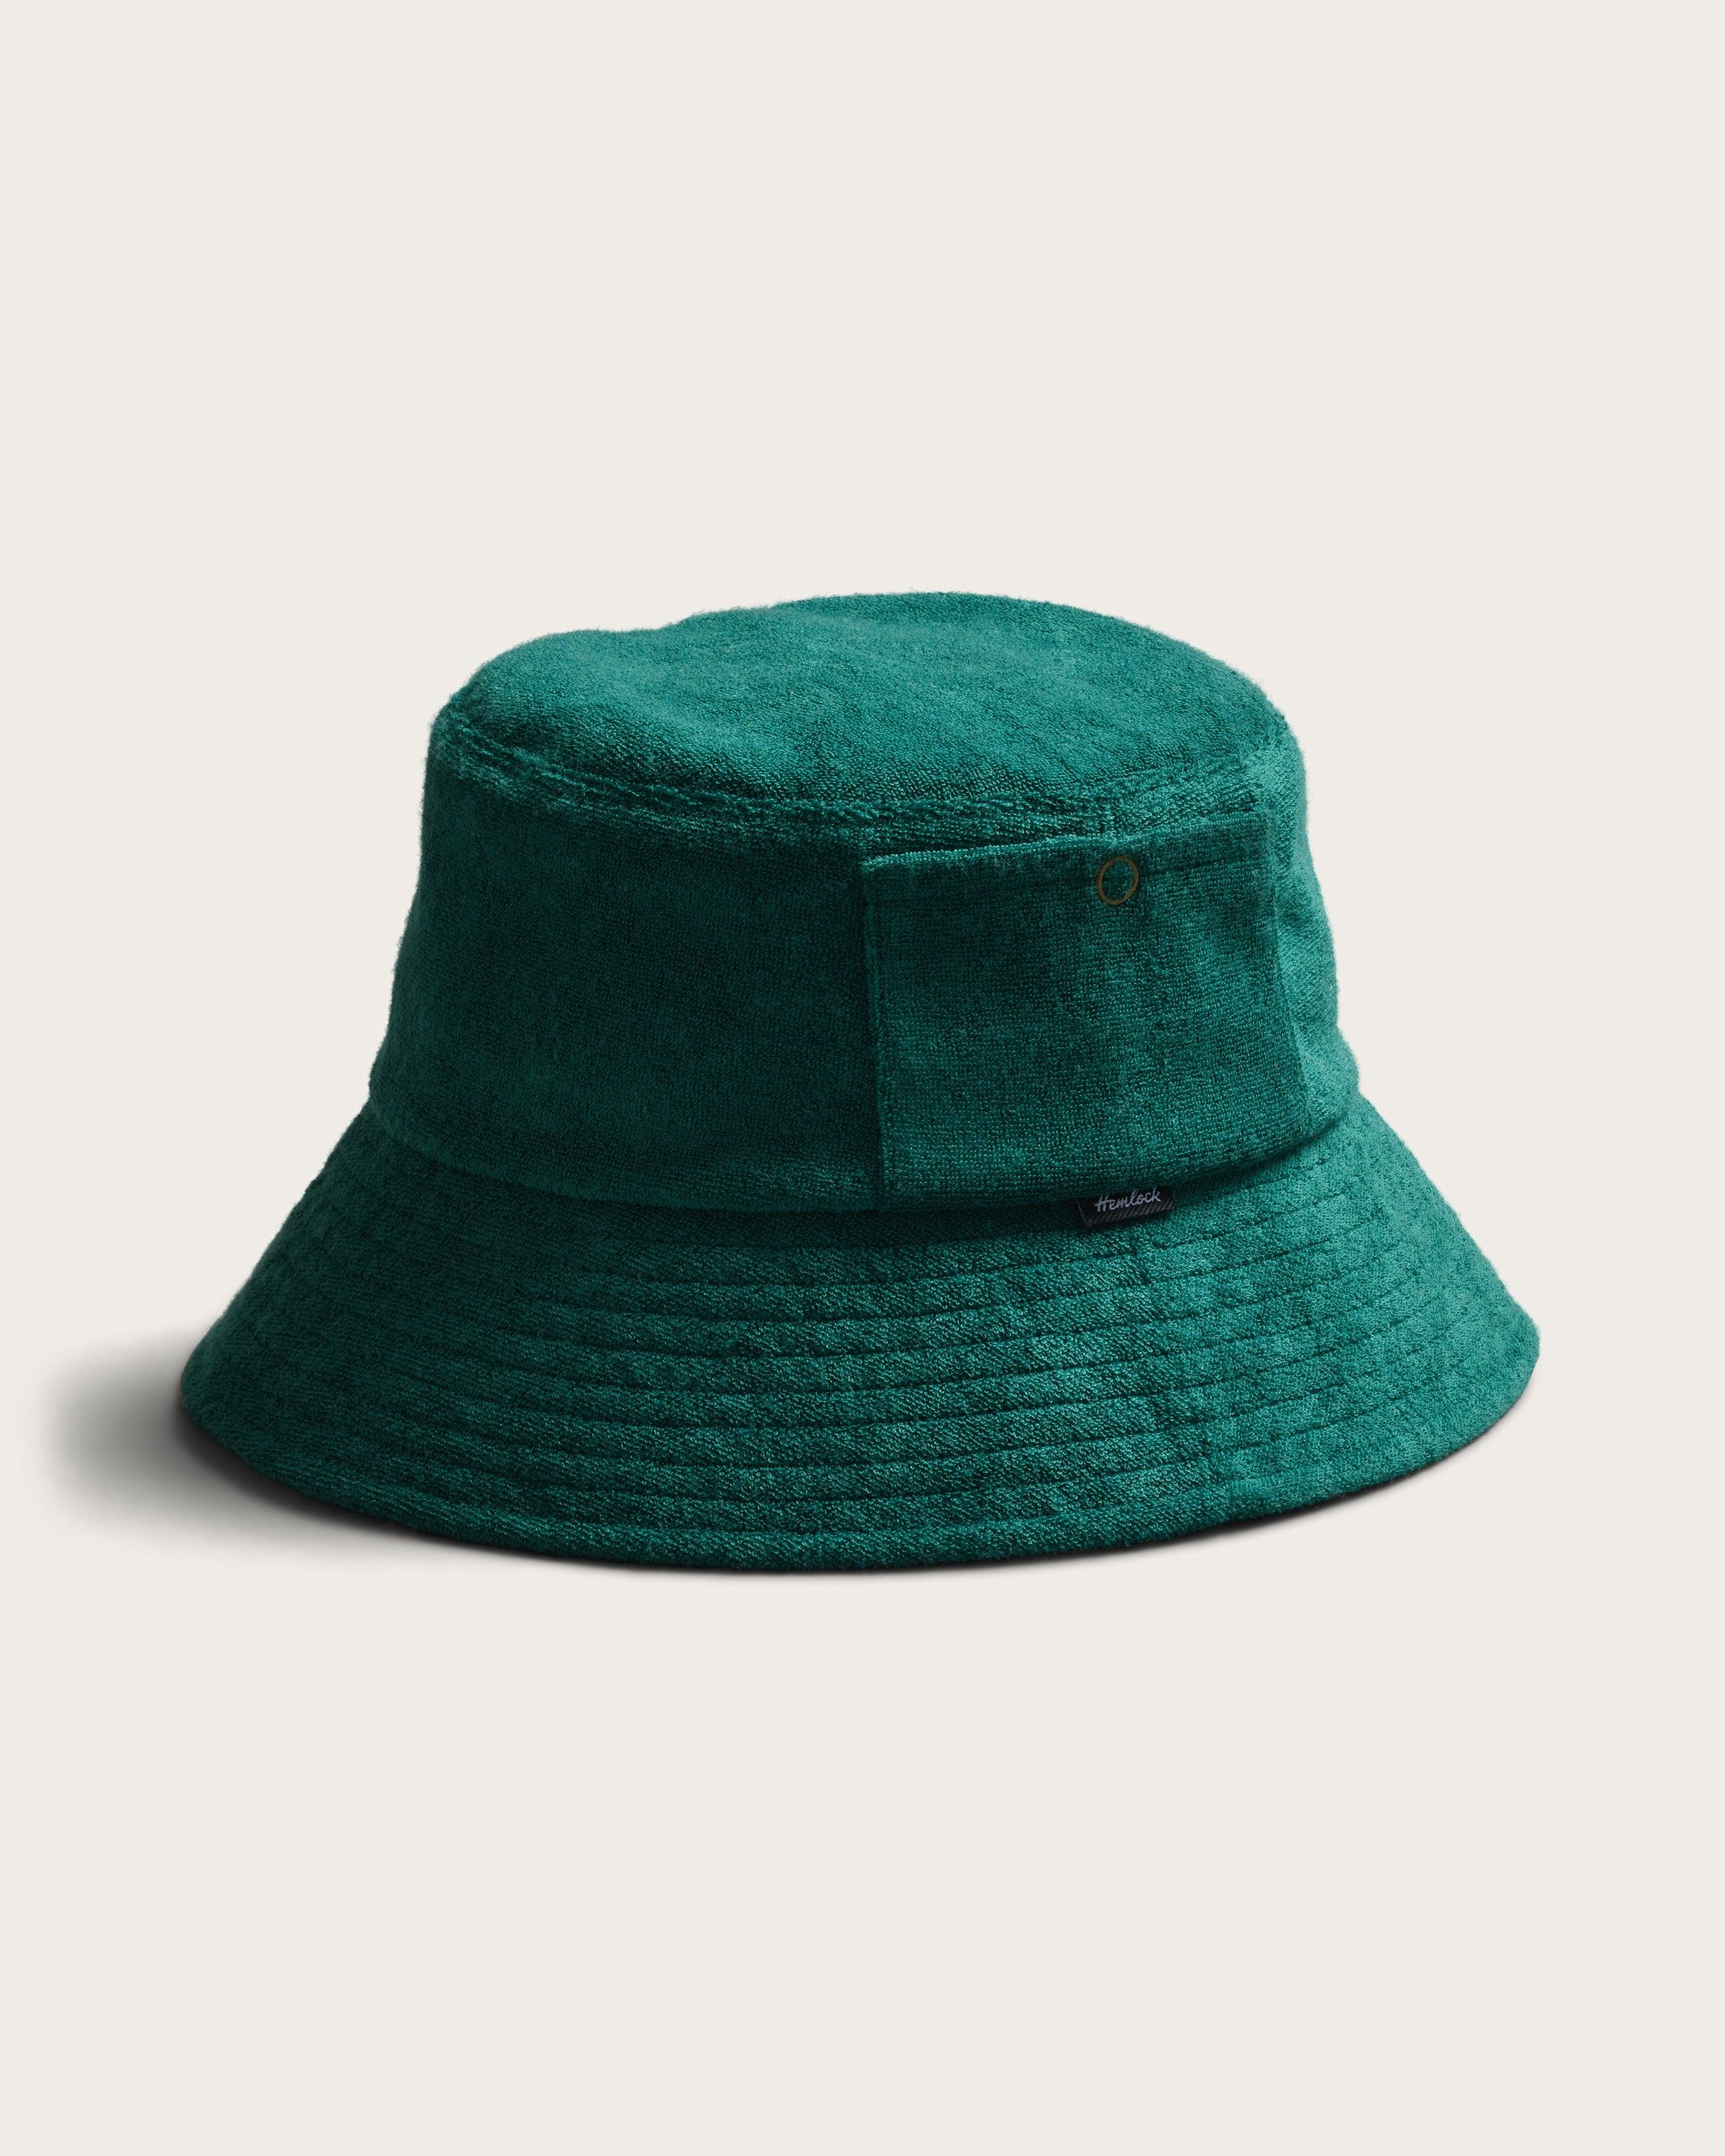 Marina Bucket in Emerald – Hemlock Hat Co.